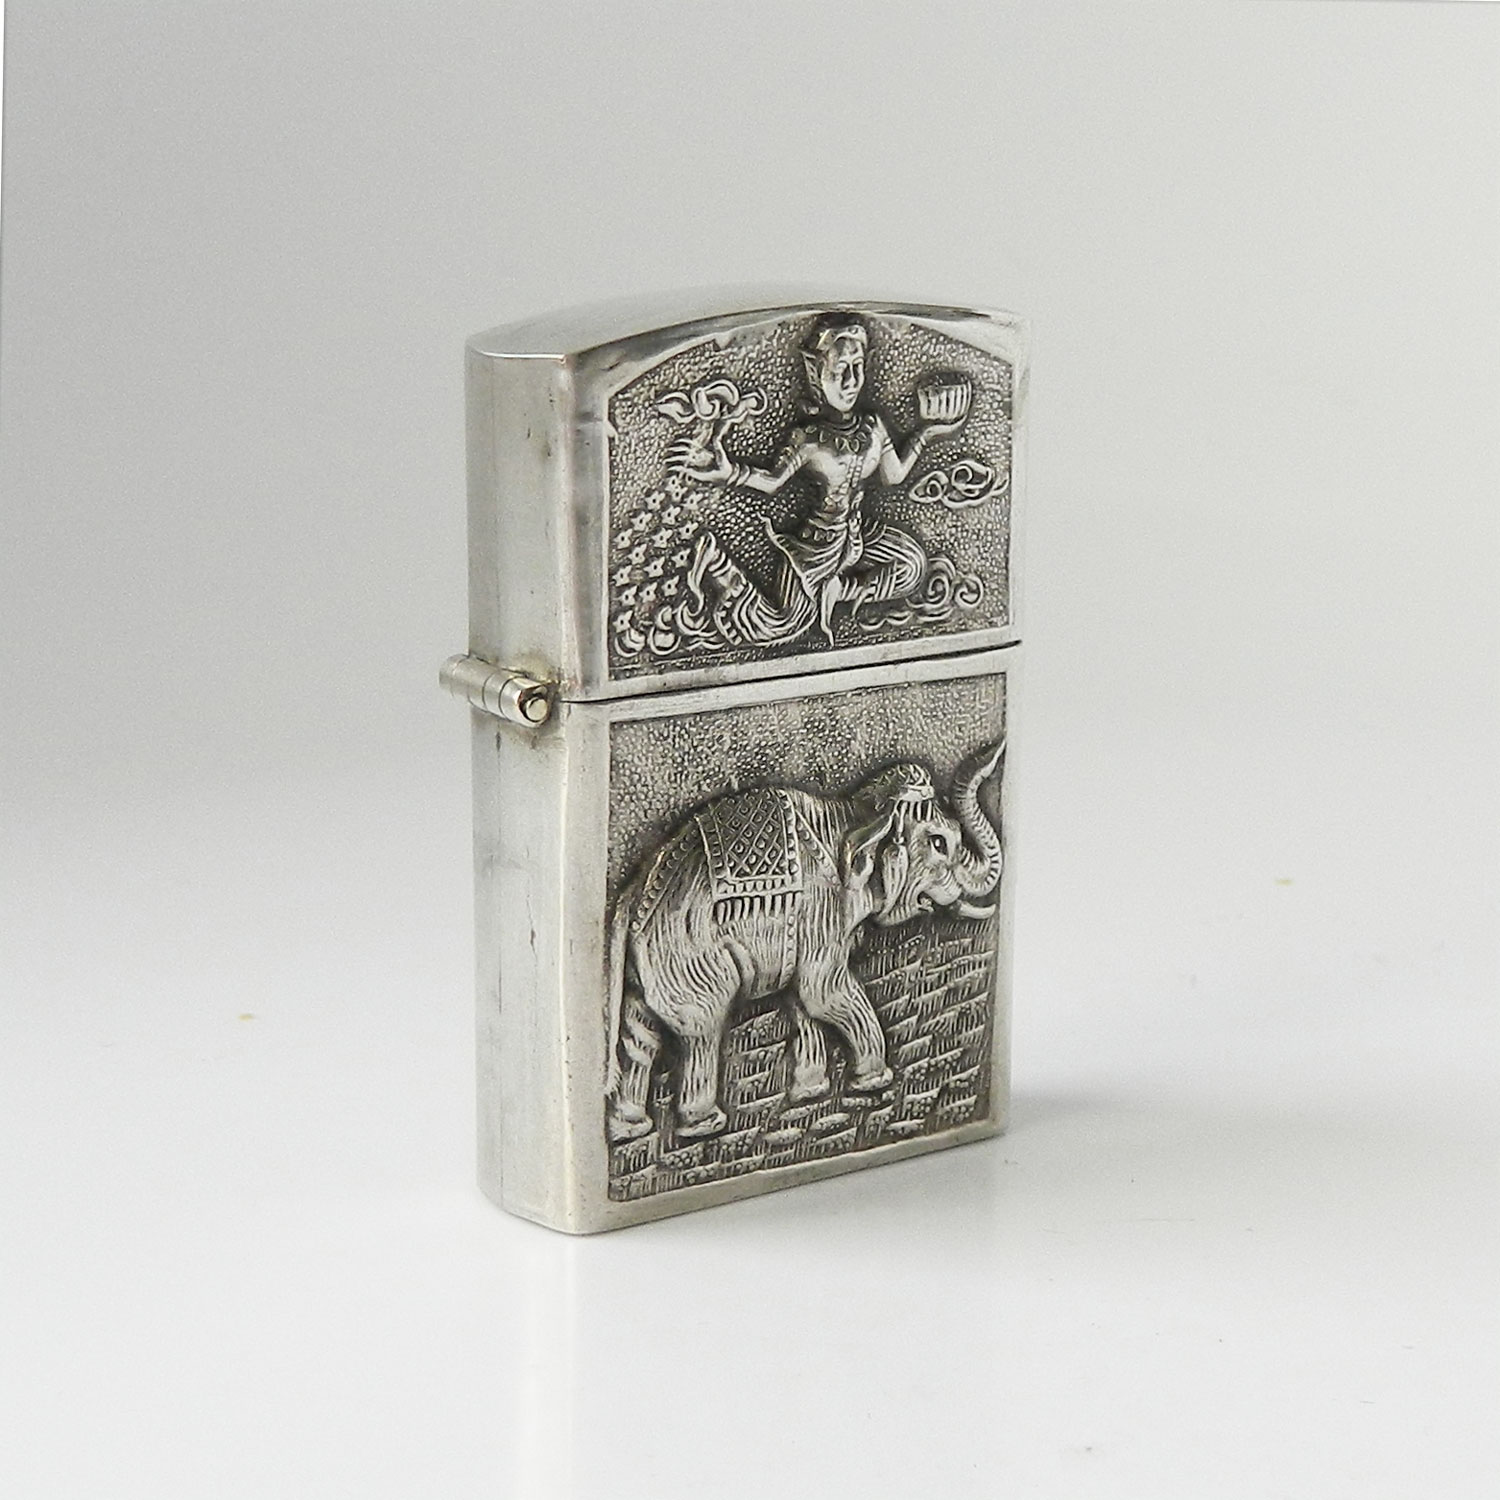 Siam sterling silver lighter case